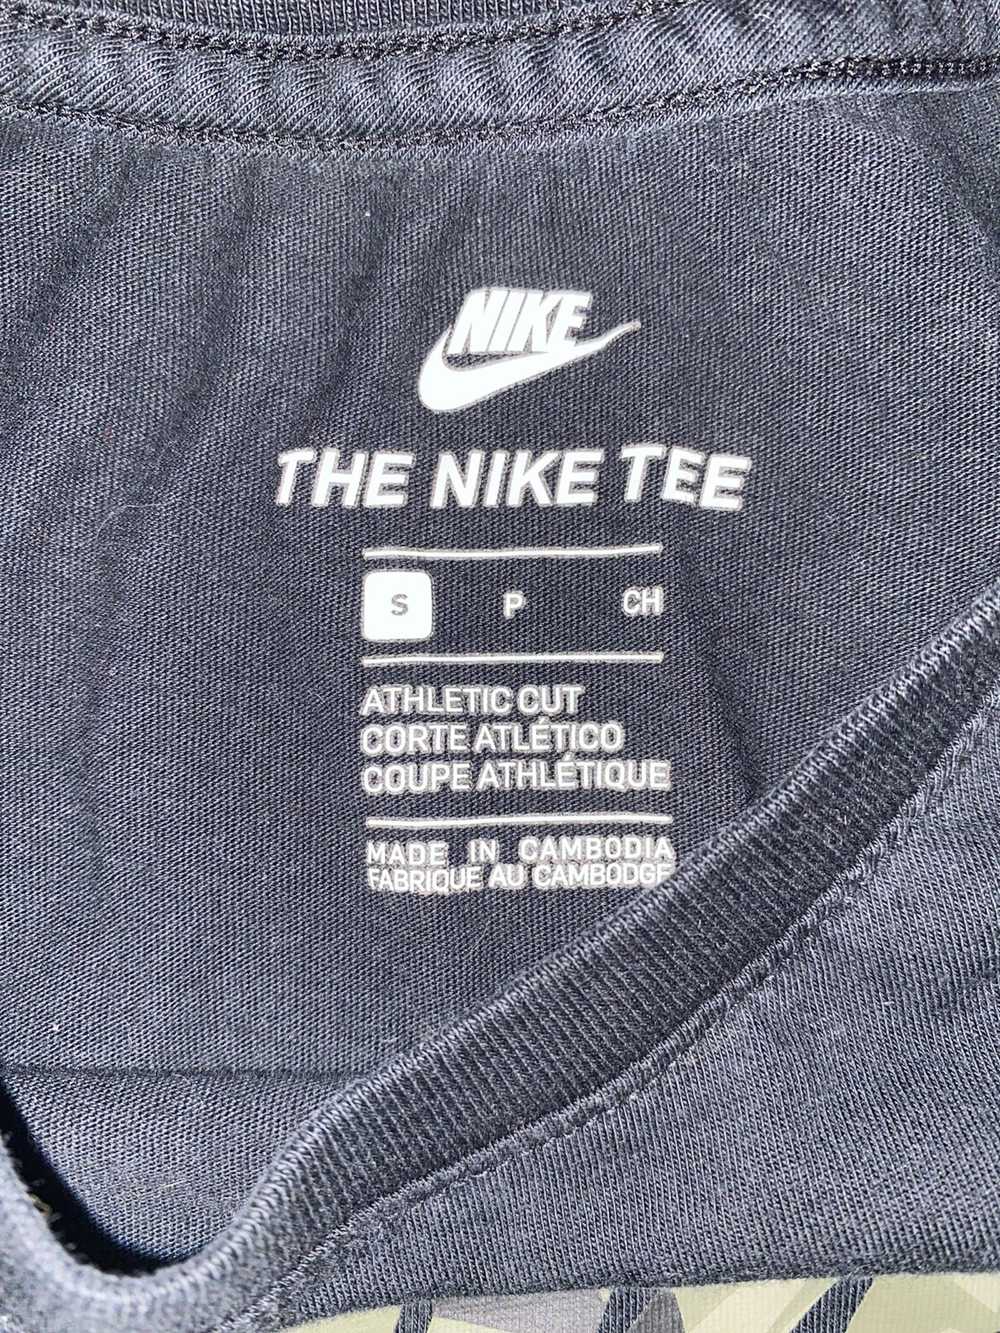 Nike Nike Camo Big Logo Tee #1615-65 - image 2